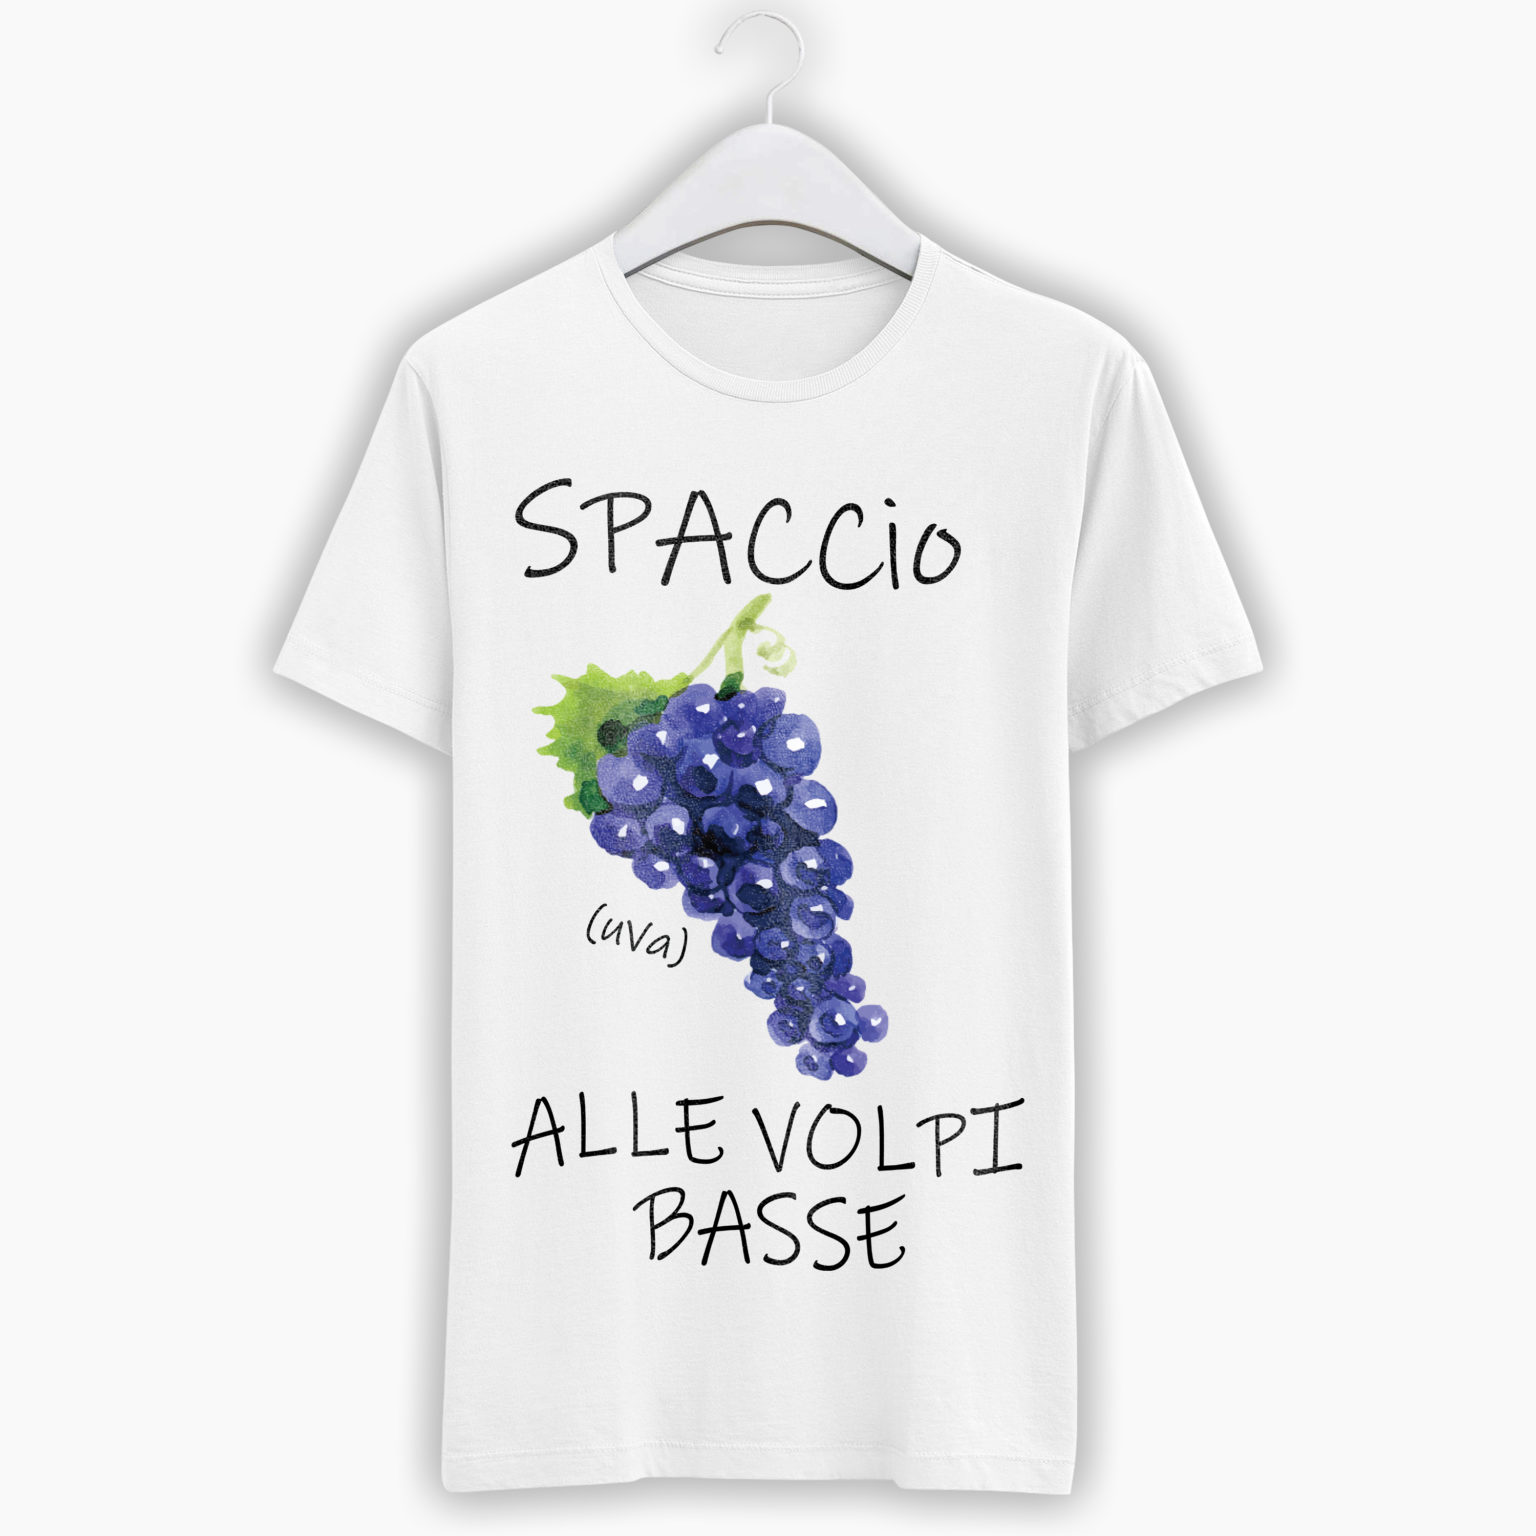 T-Shirt Donna Divertente – Spaccio Uva alle Volpi Basse